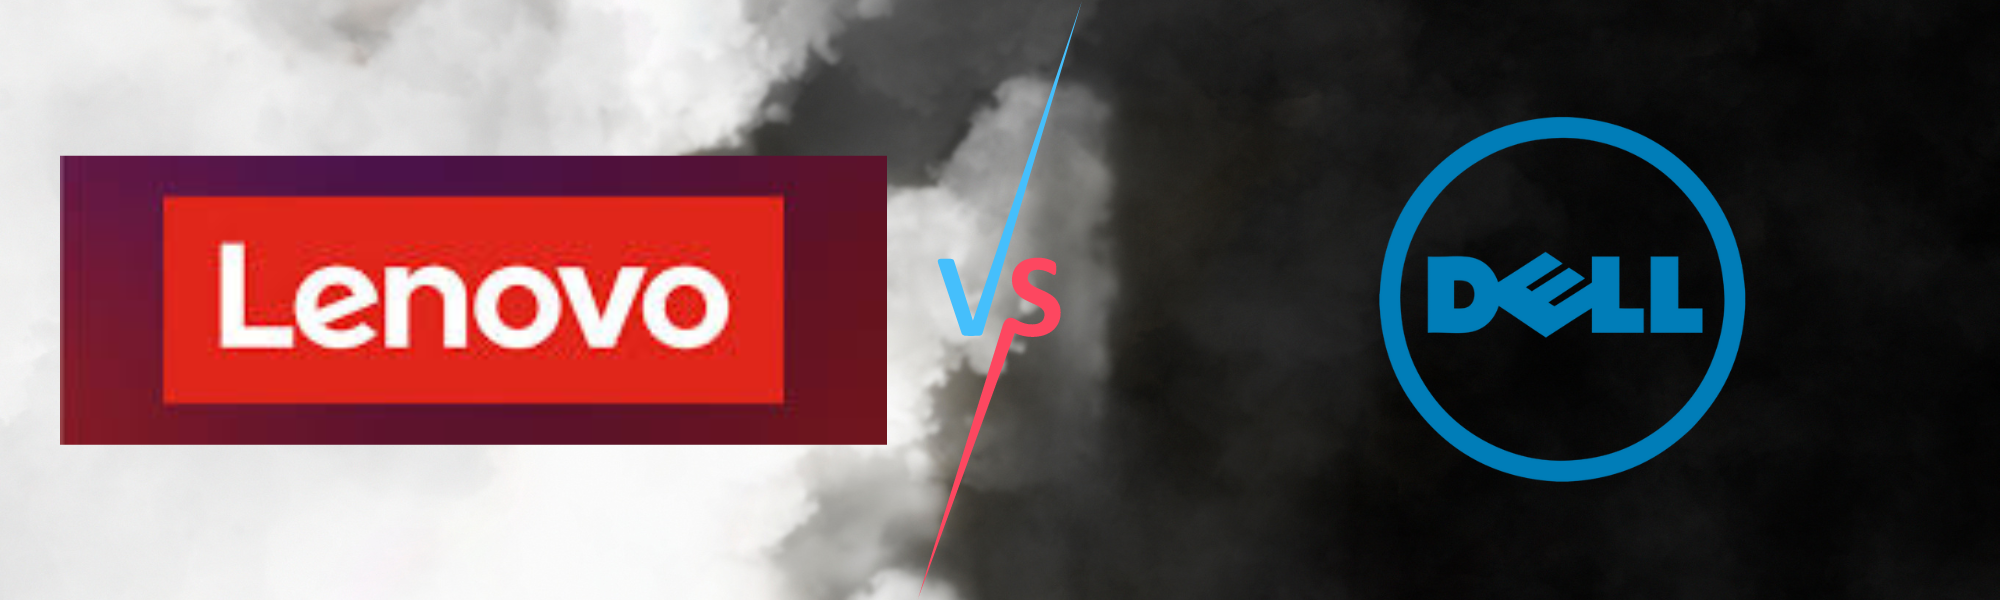 Business Desktop Showdown: Dell vs. Lenovo - Choosing the Right Desktop Solution for Your Company